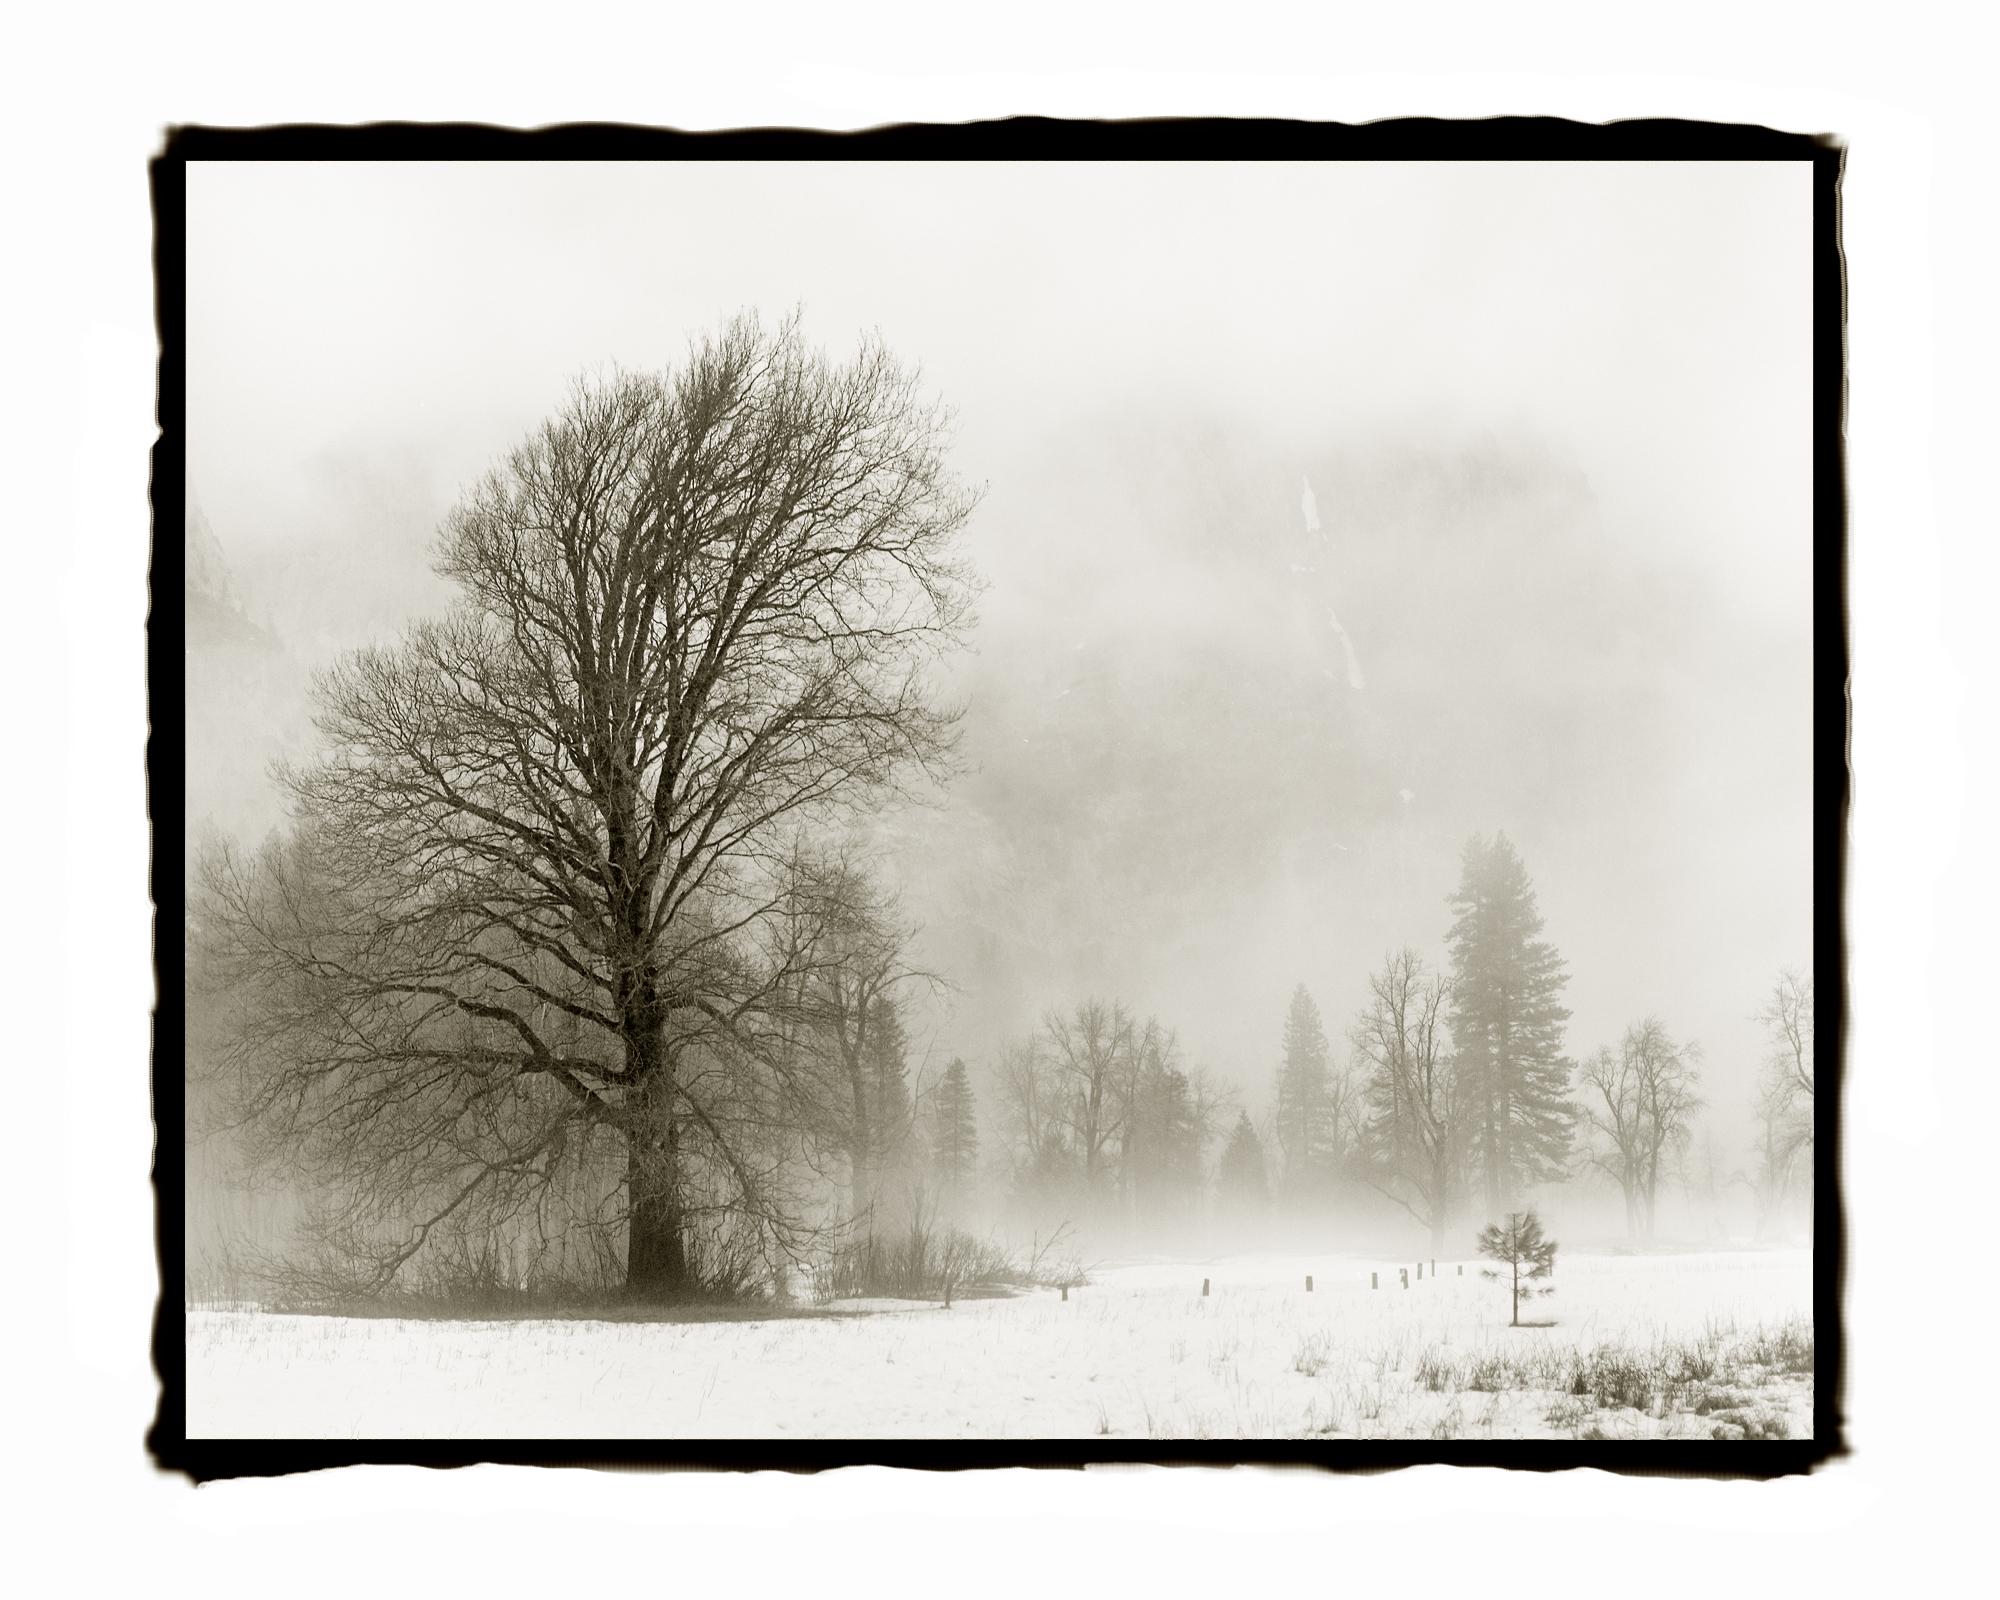 Barbara Ann Leideritz Landscape Photograph - Oaks and Mist